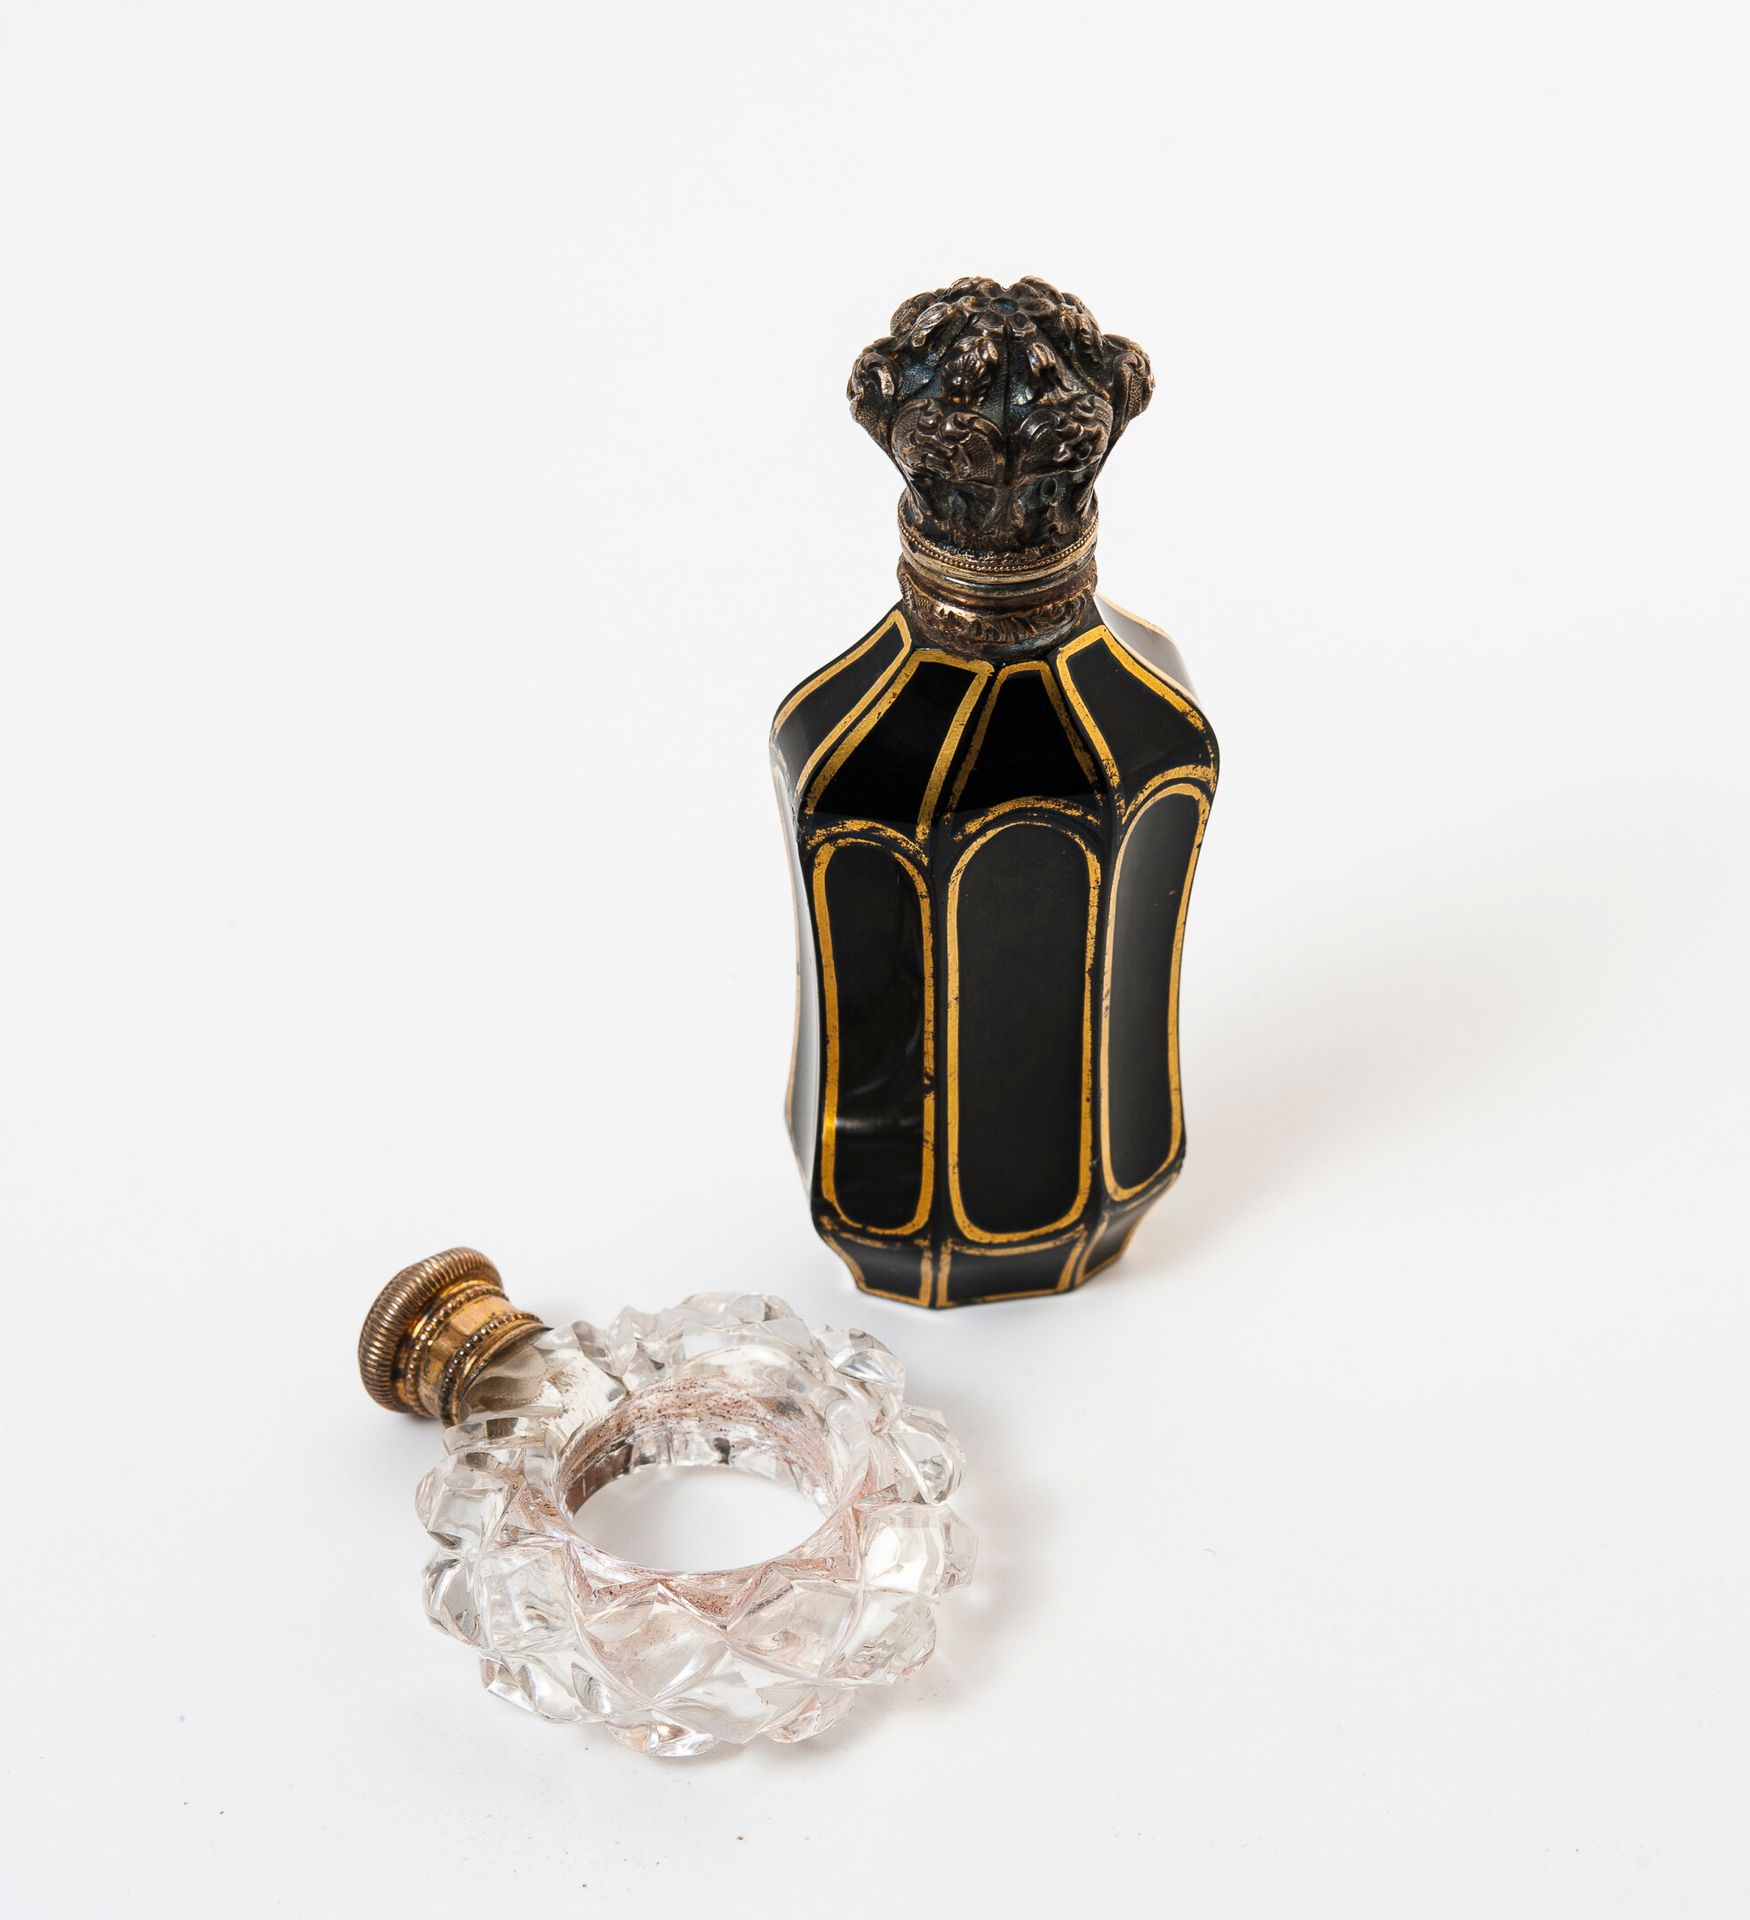 FRANCE, XIXEME SIECLE 两个盐瓶:

- 一个有环形主体的水晶或无色玻璃切割成钻石点。

- 一个是黑色的水晶体，一个是金色的线。

银制(&hellip;